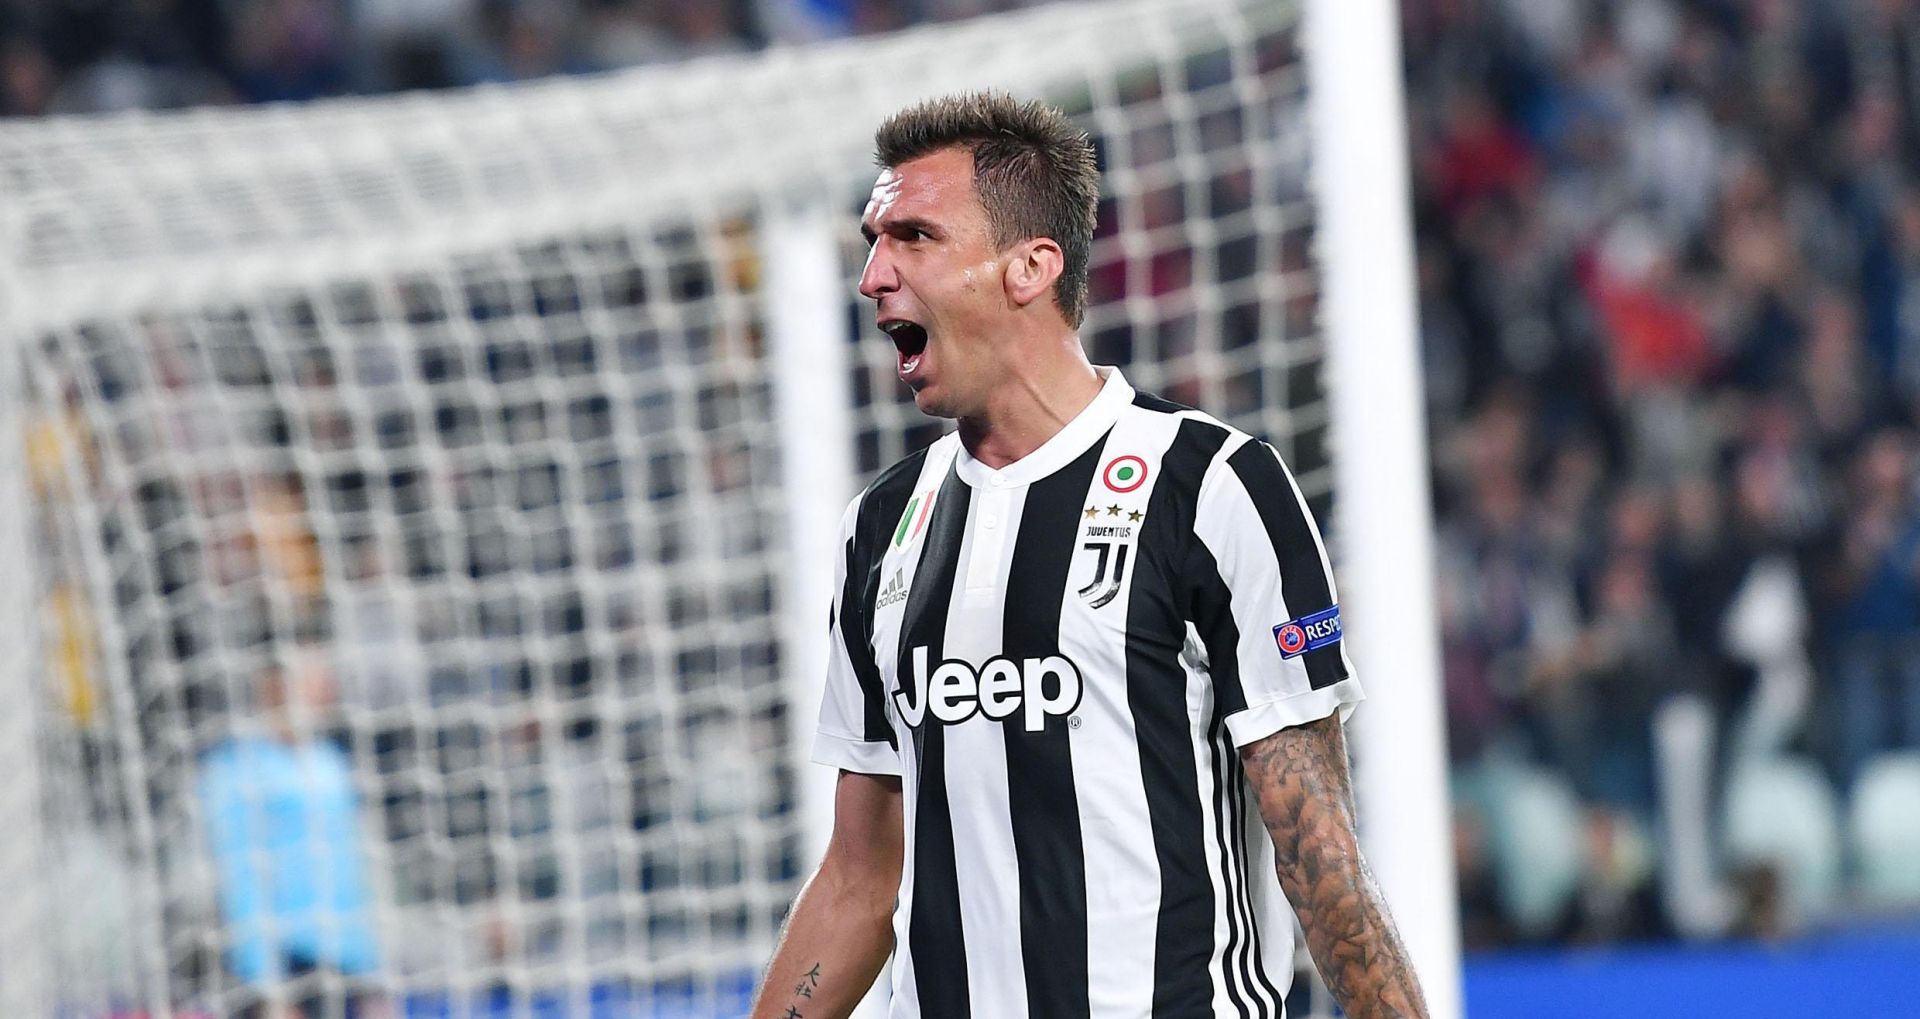 RAI prenosio utakmicu Juventus – Torino bez komentatora